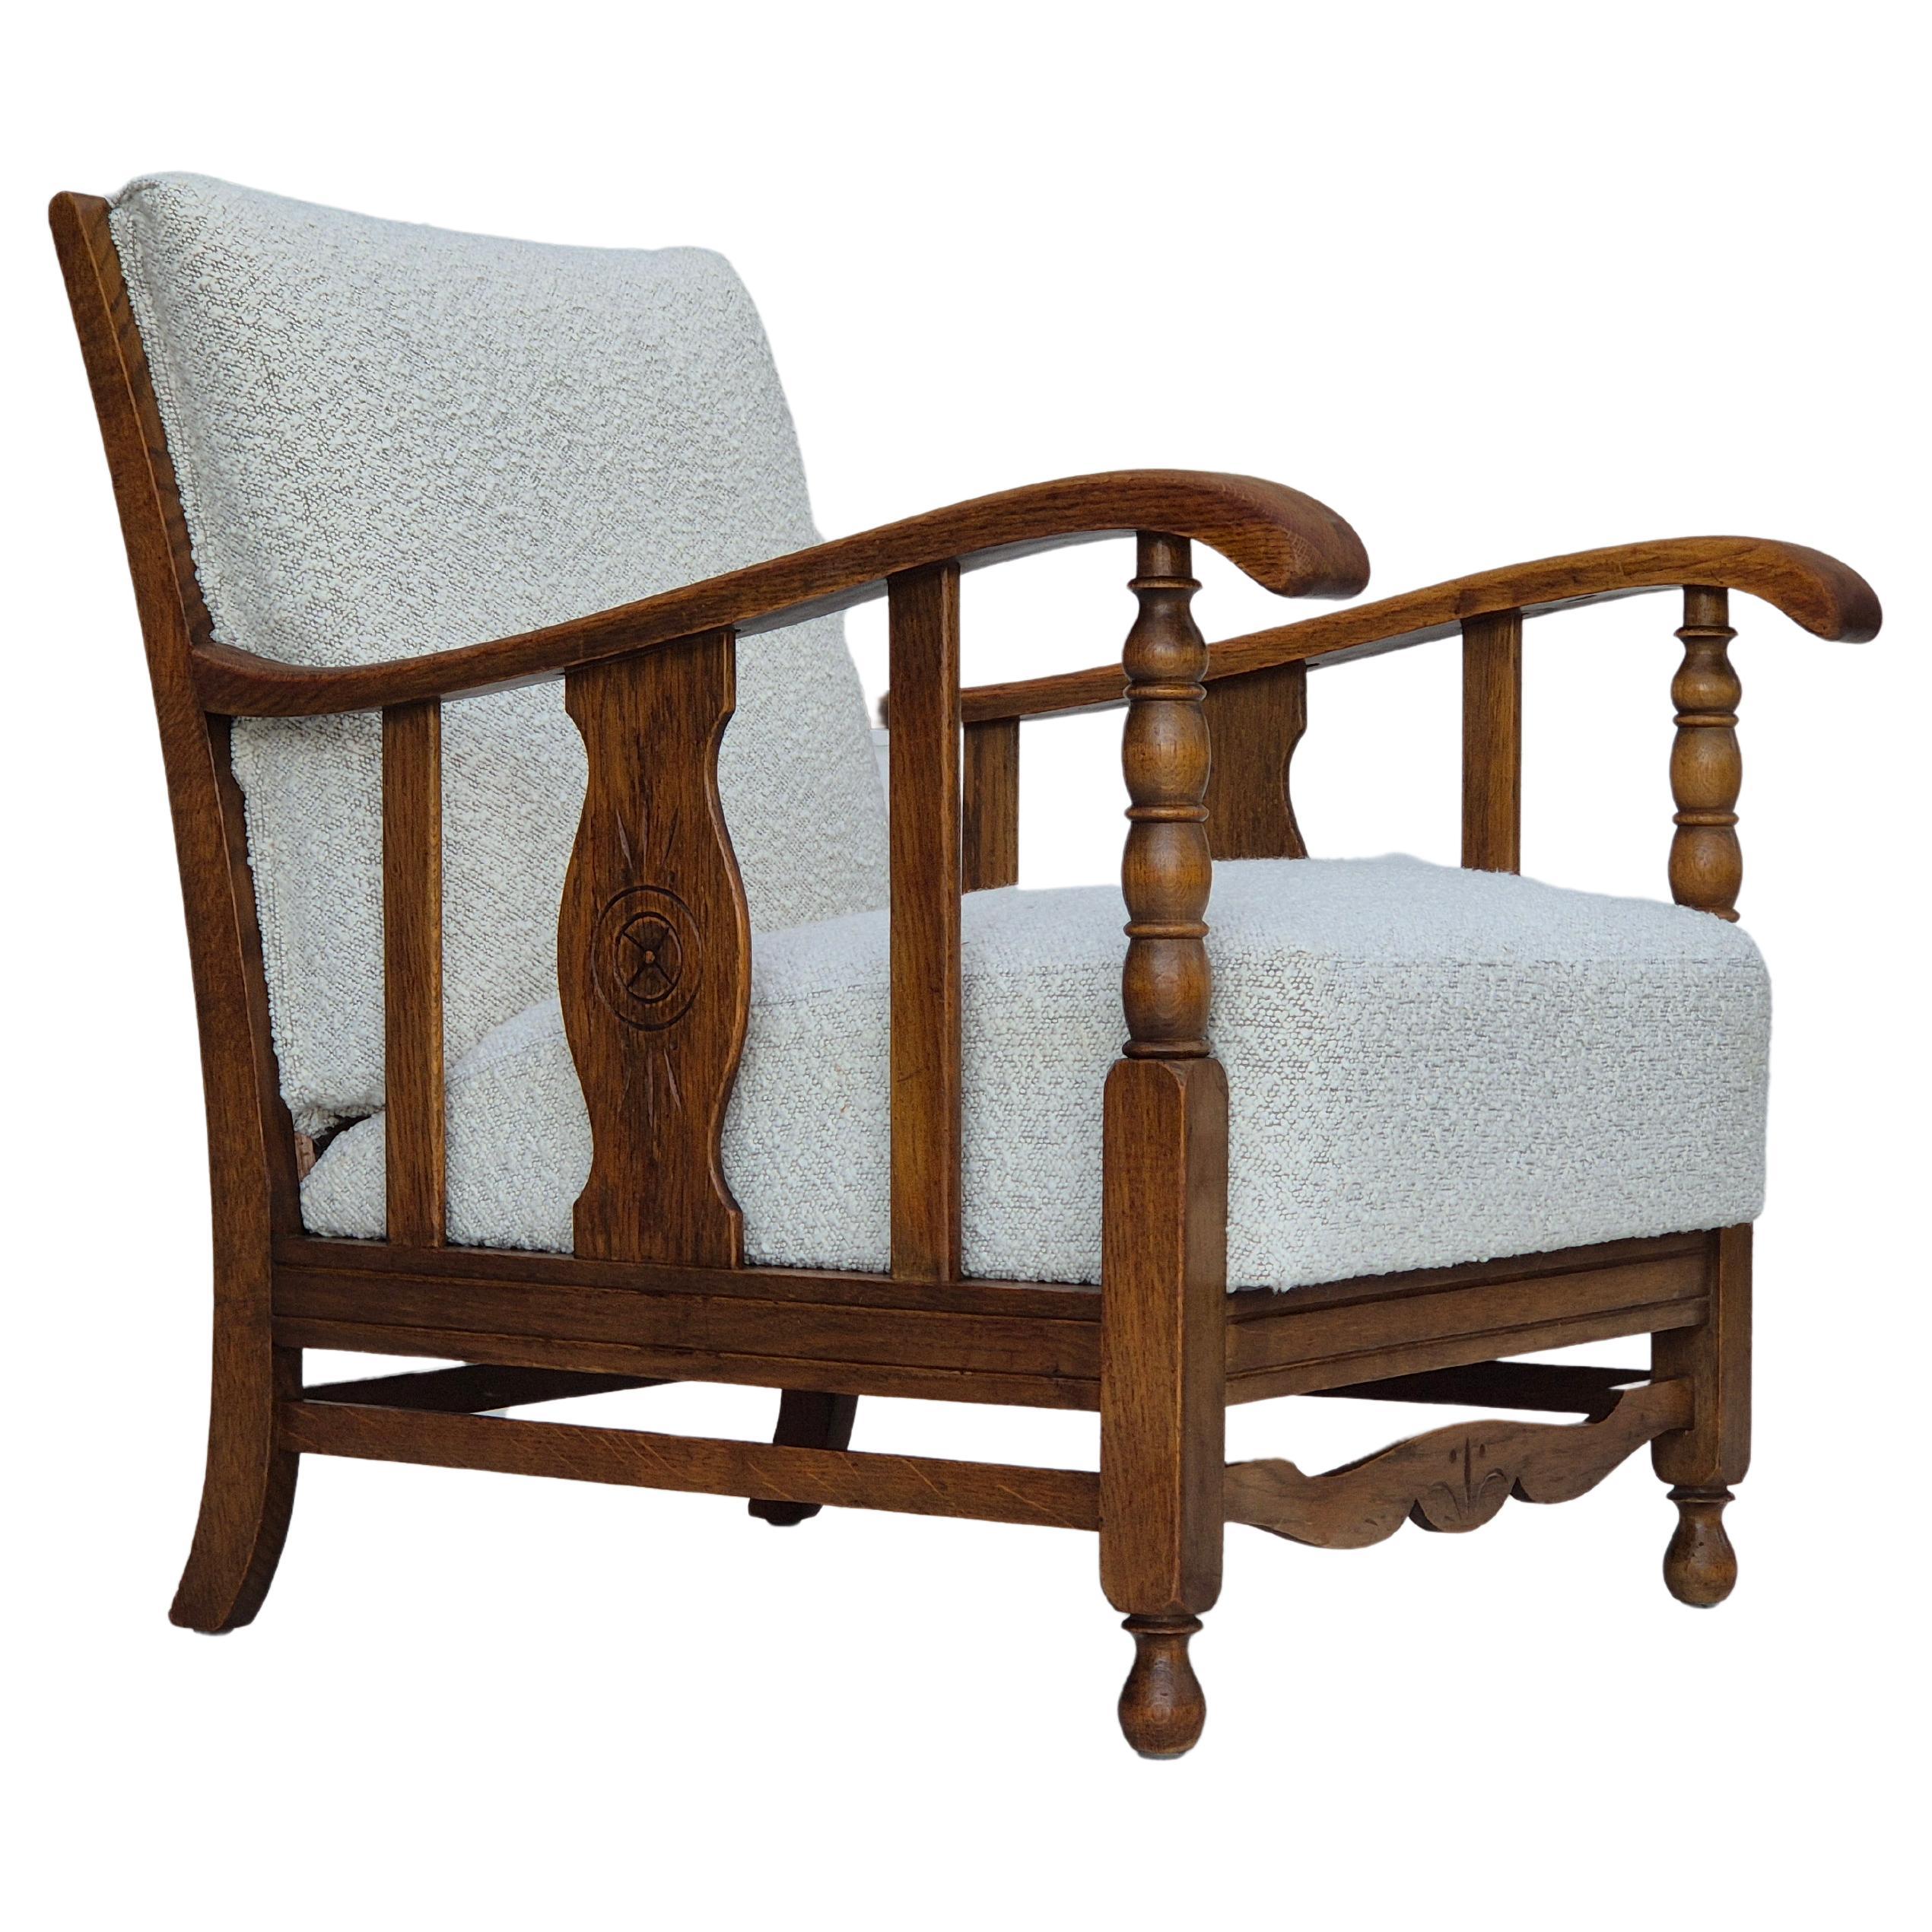 1950s, Scandinavian design, reupholstered armchair, fabric, oak wood. For Sale